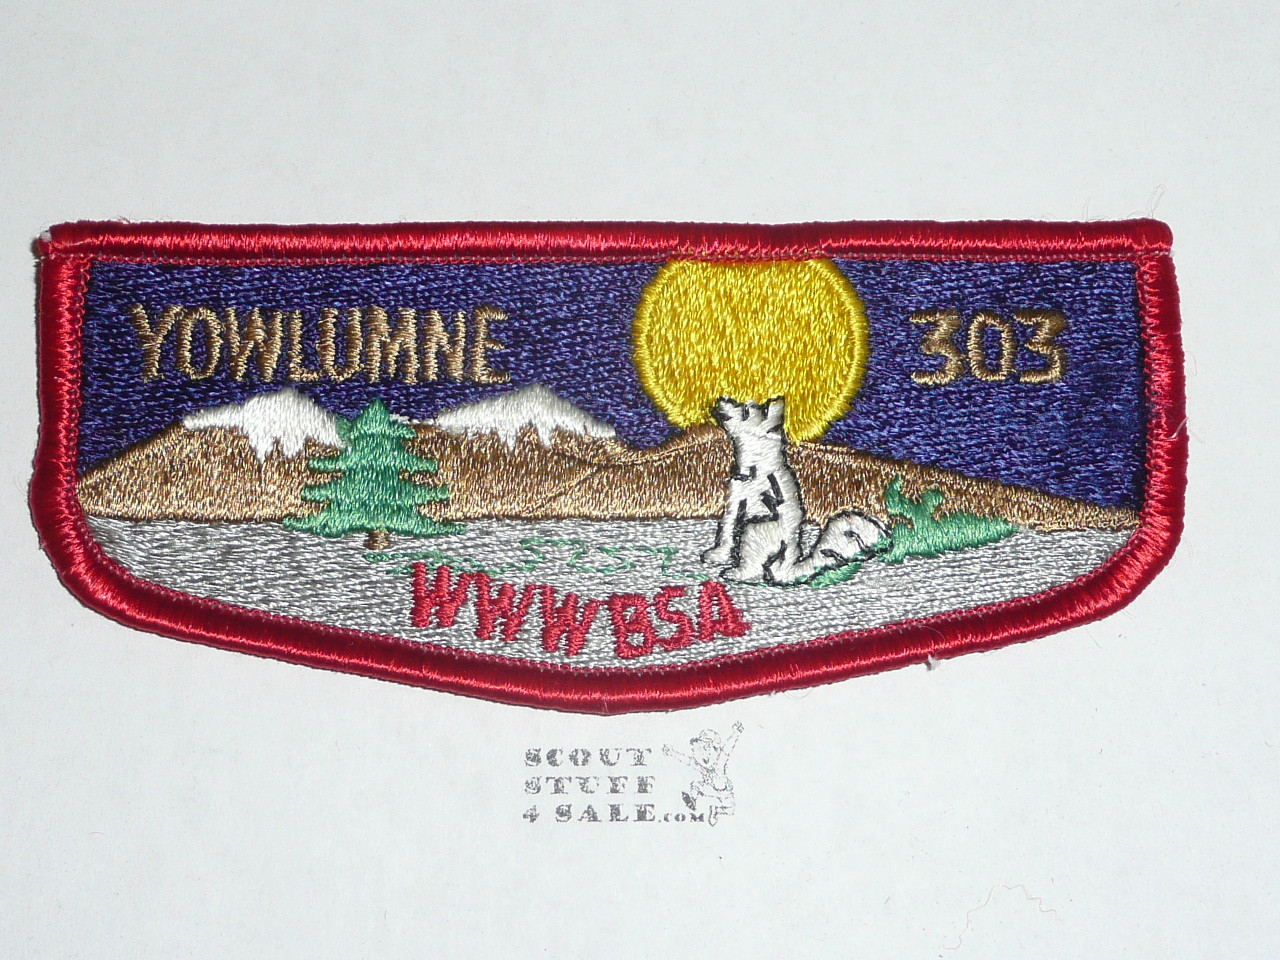 Order of the Arrow Lodge #303 Yowlumne s5 Flap Patch